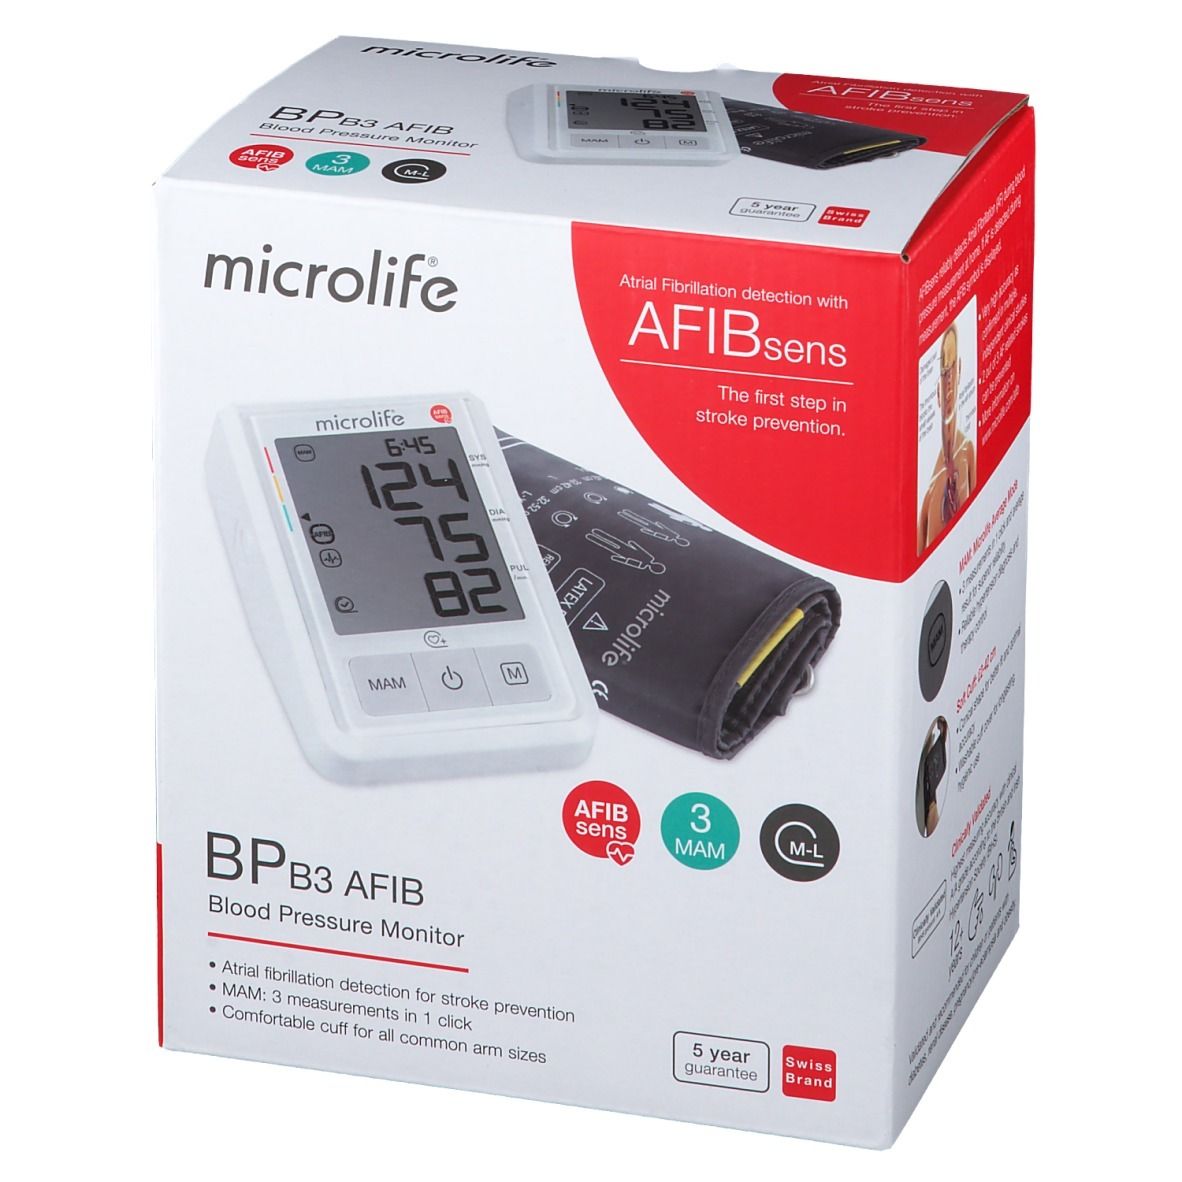 Microlife BP B3 AFIB Tensiomètre